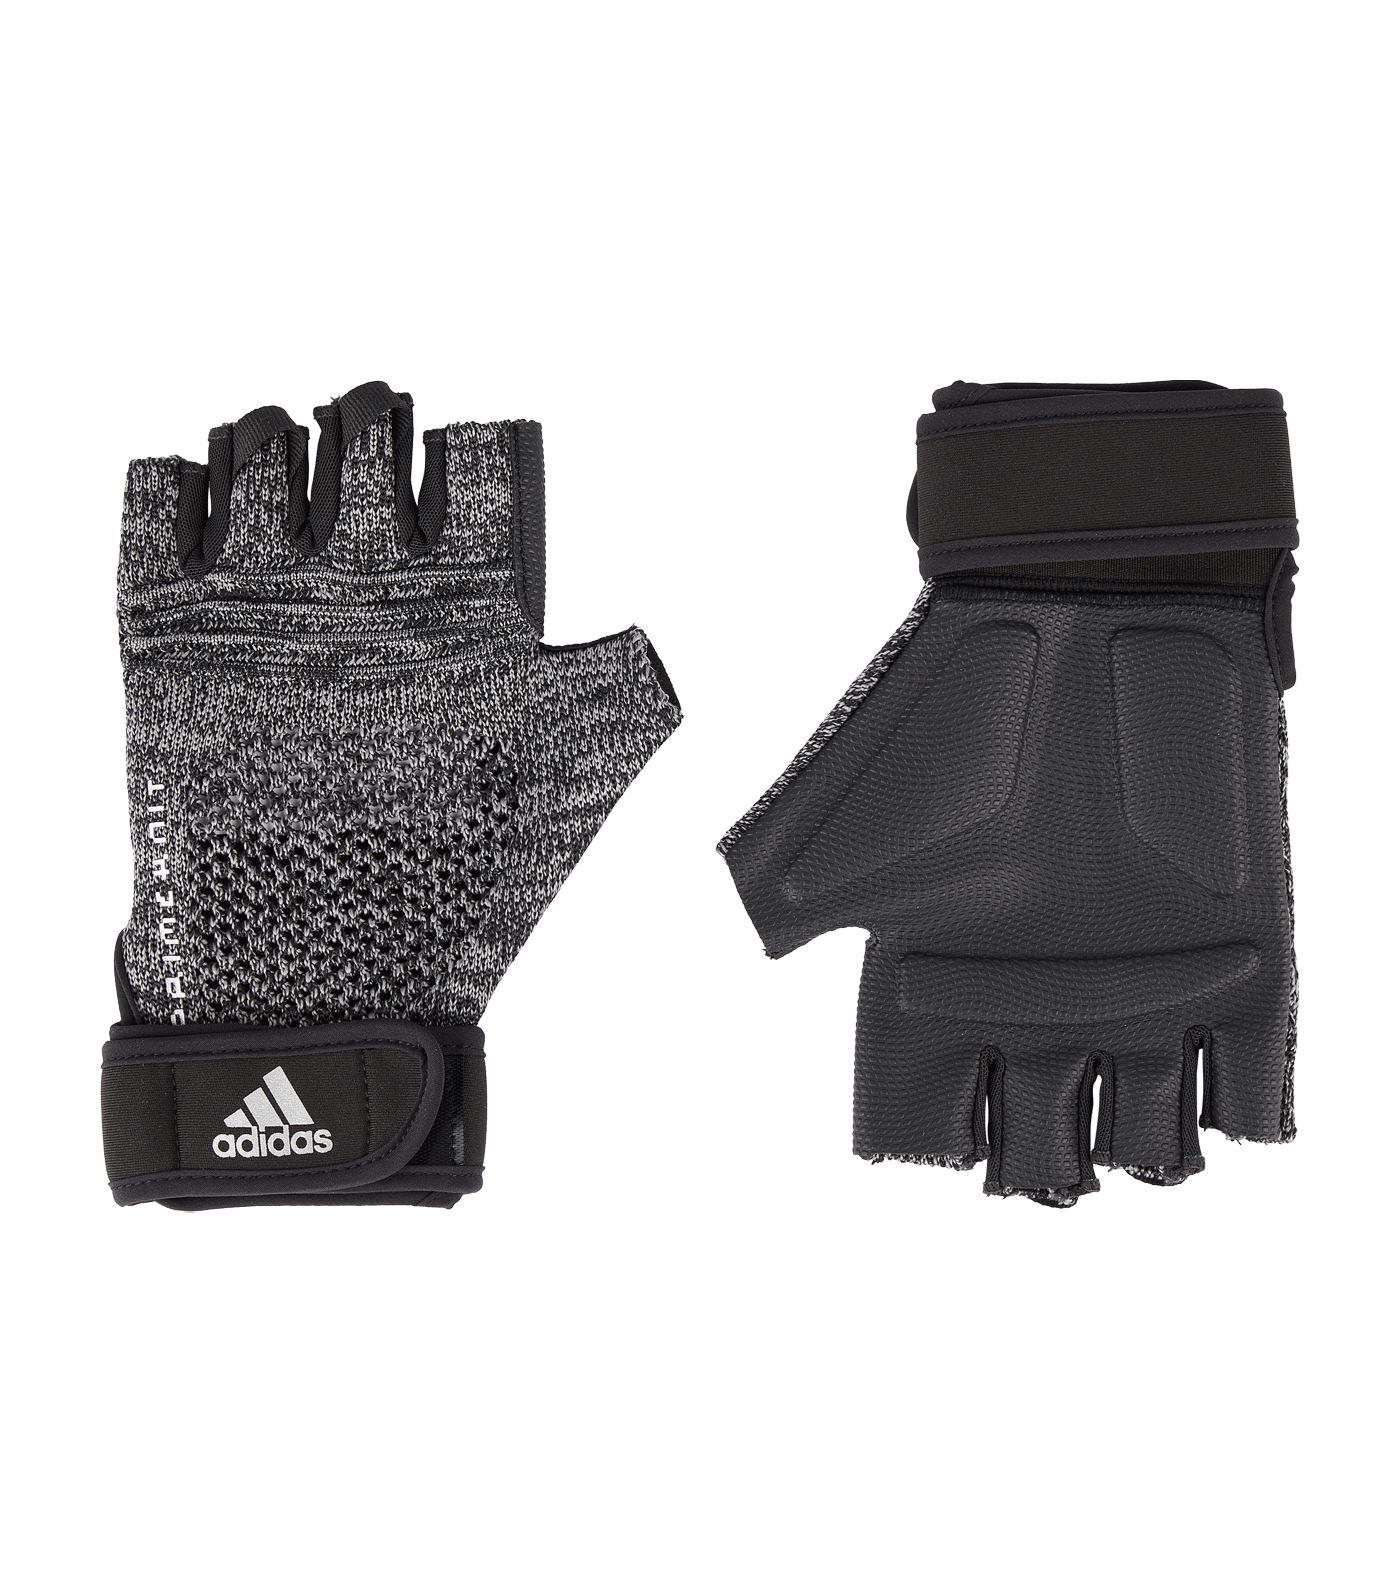 adidas Primeknit Gloves in Black for 